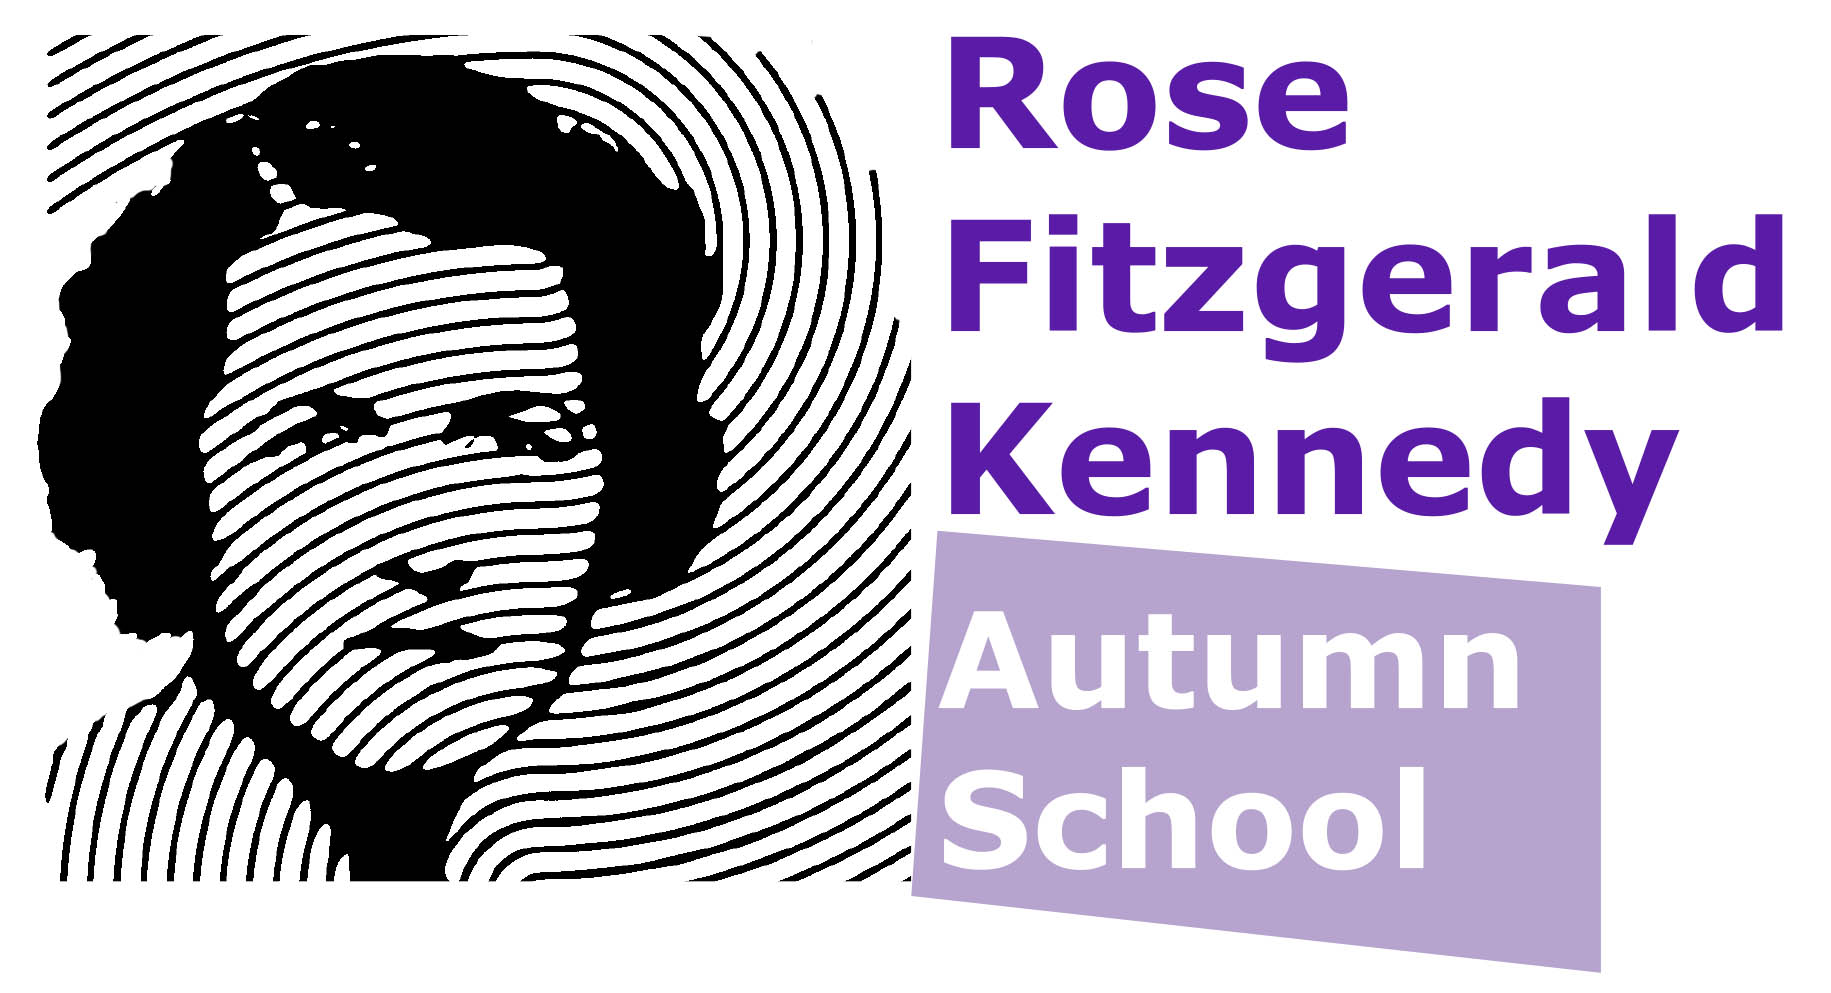 rose fitzgerald kennedy autumn school logo